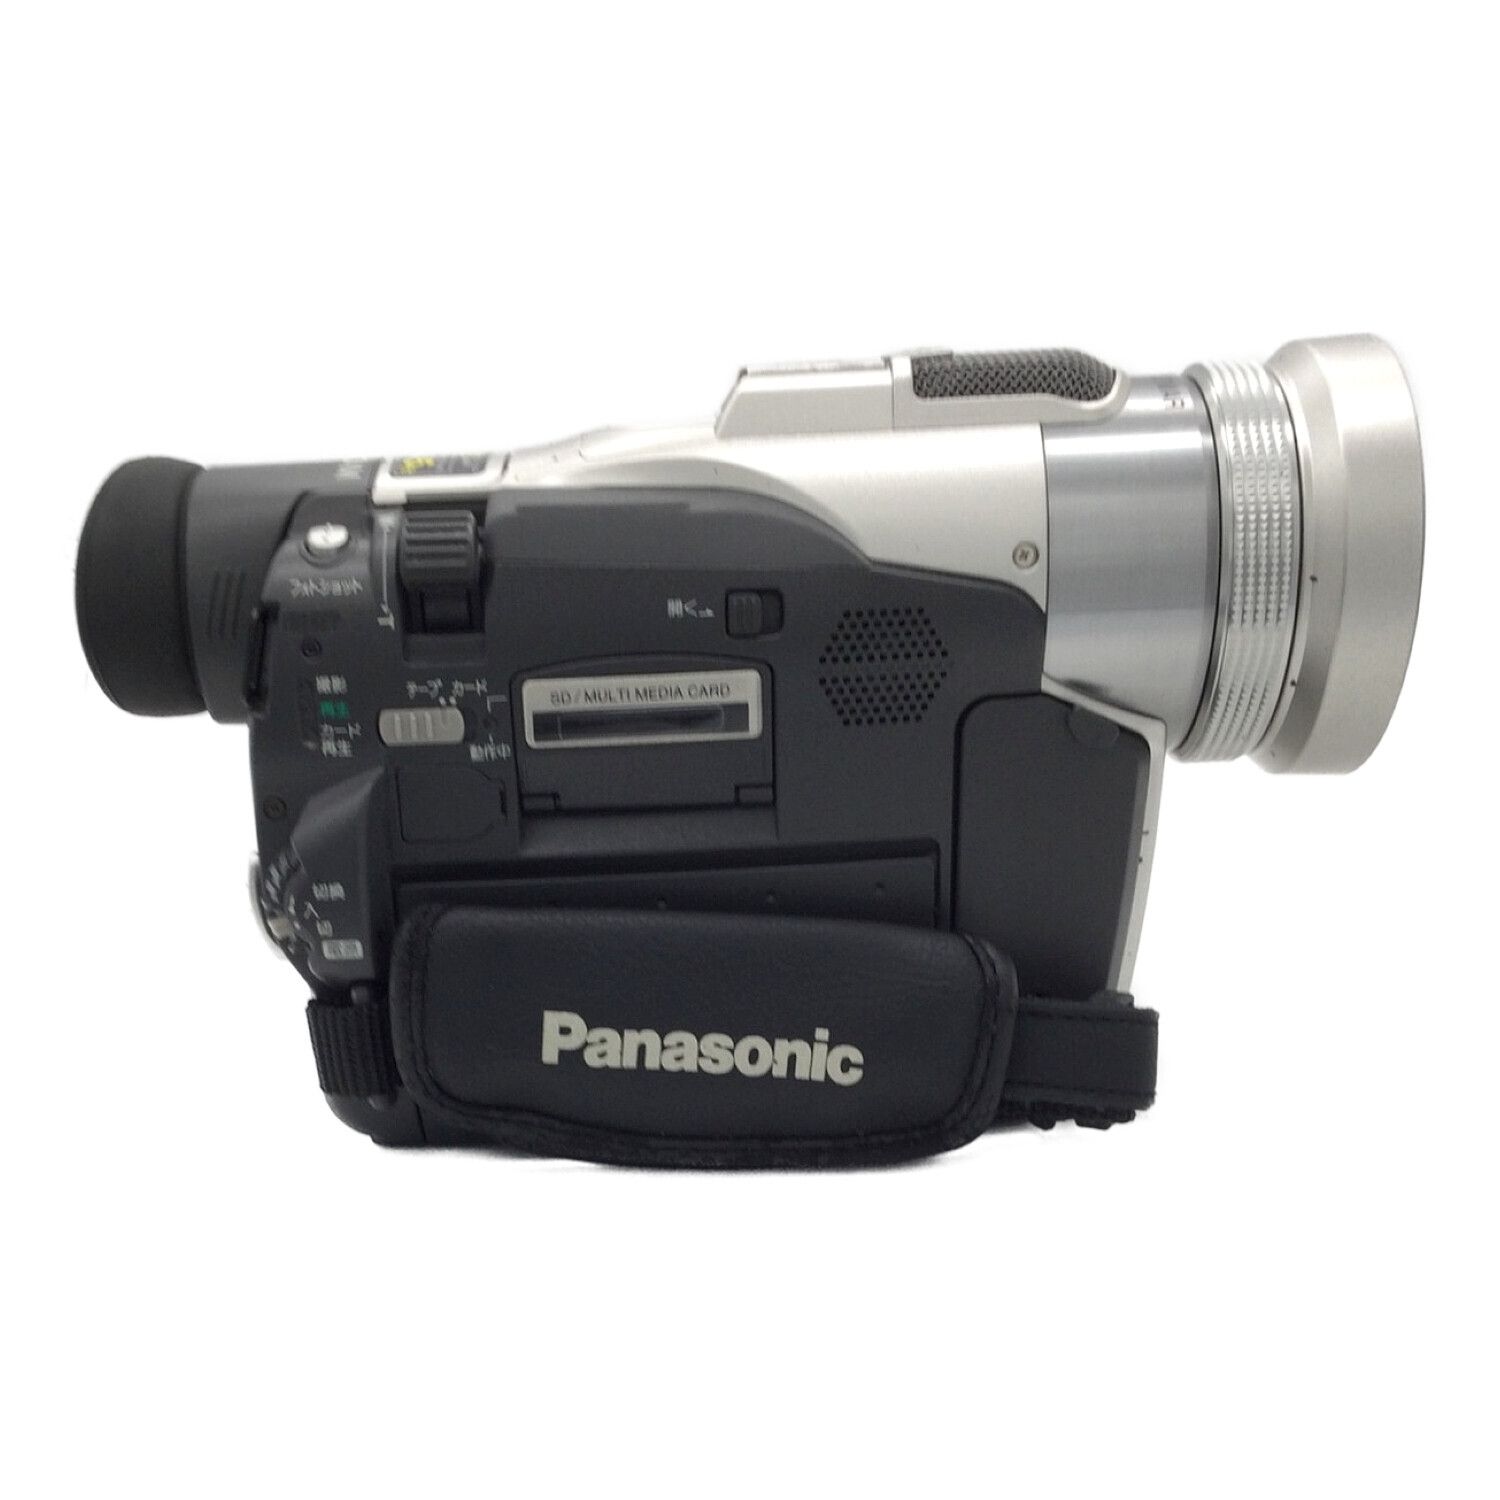 Panasonic (パナソニック) デジタルビデオカメラ ※バッテリー保証無し 